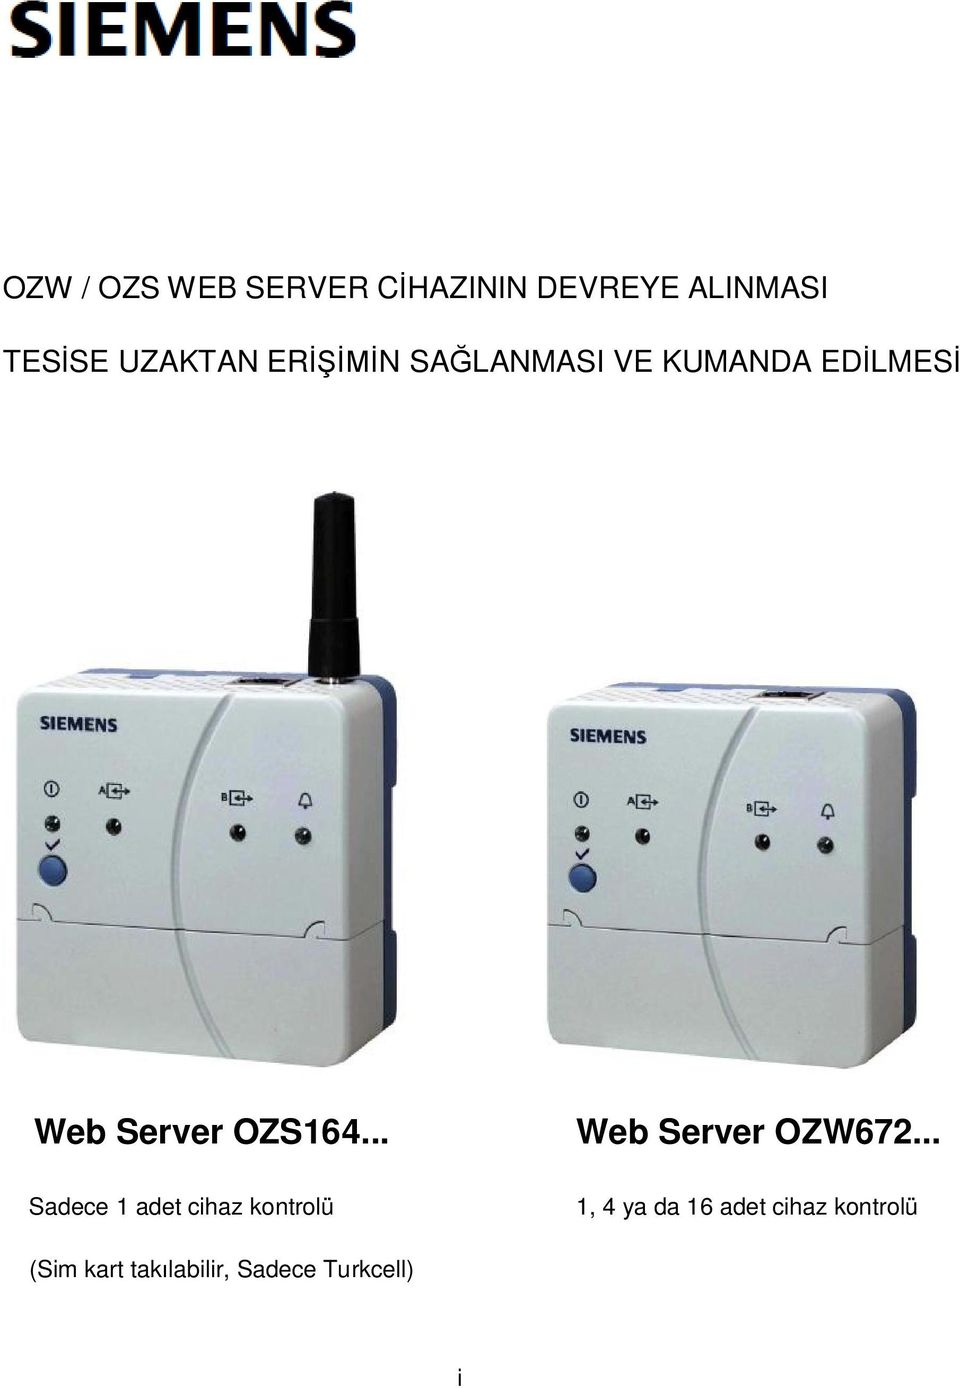 .. Sadece 1 adet cihaz kontrolü Web Server OZW672.